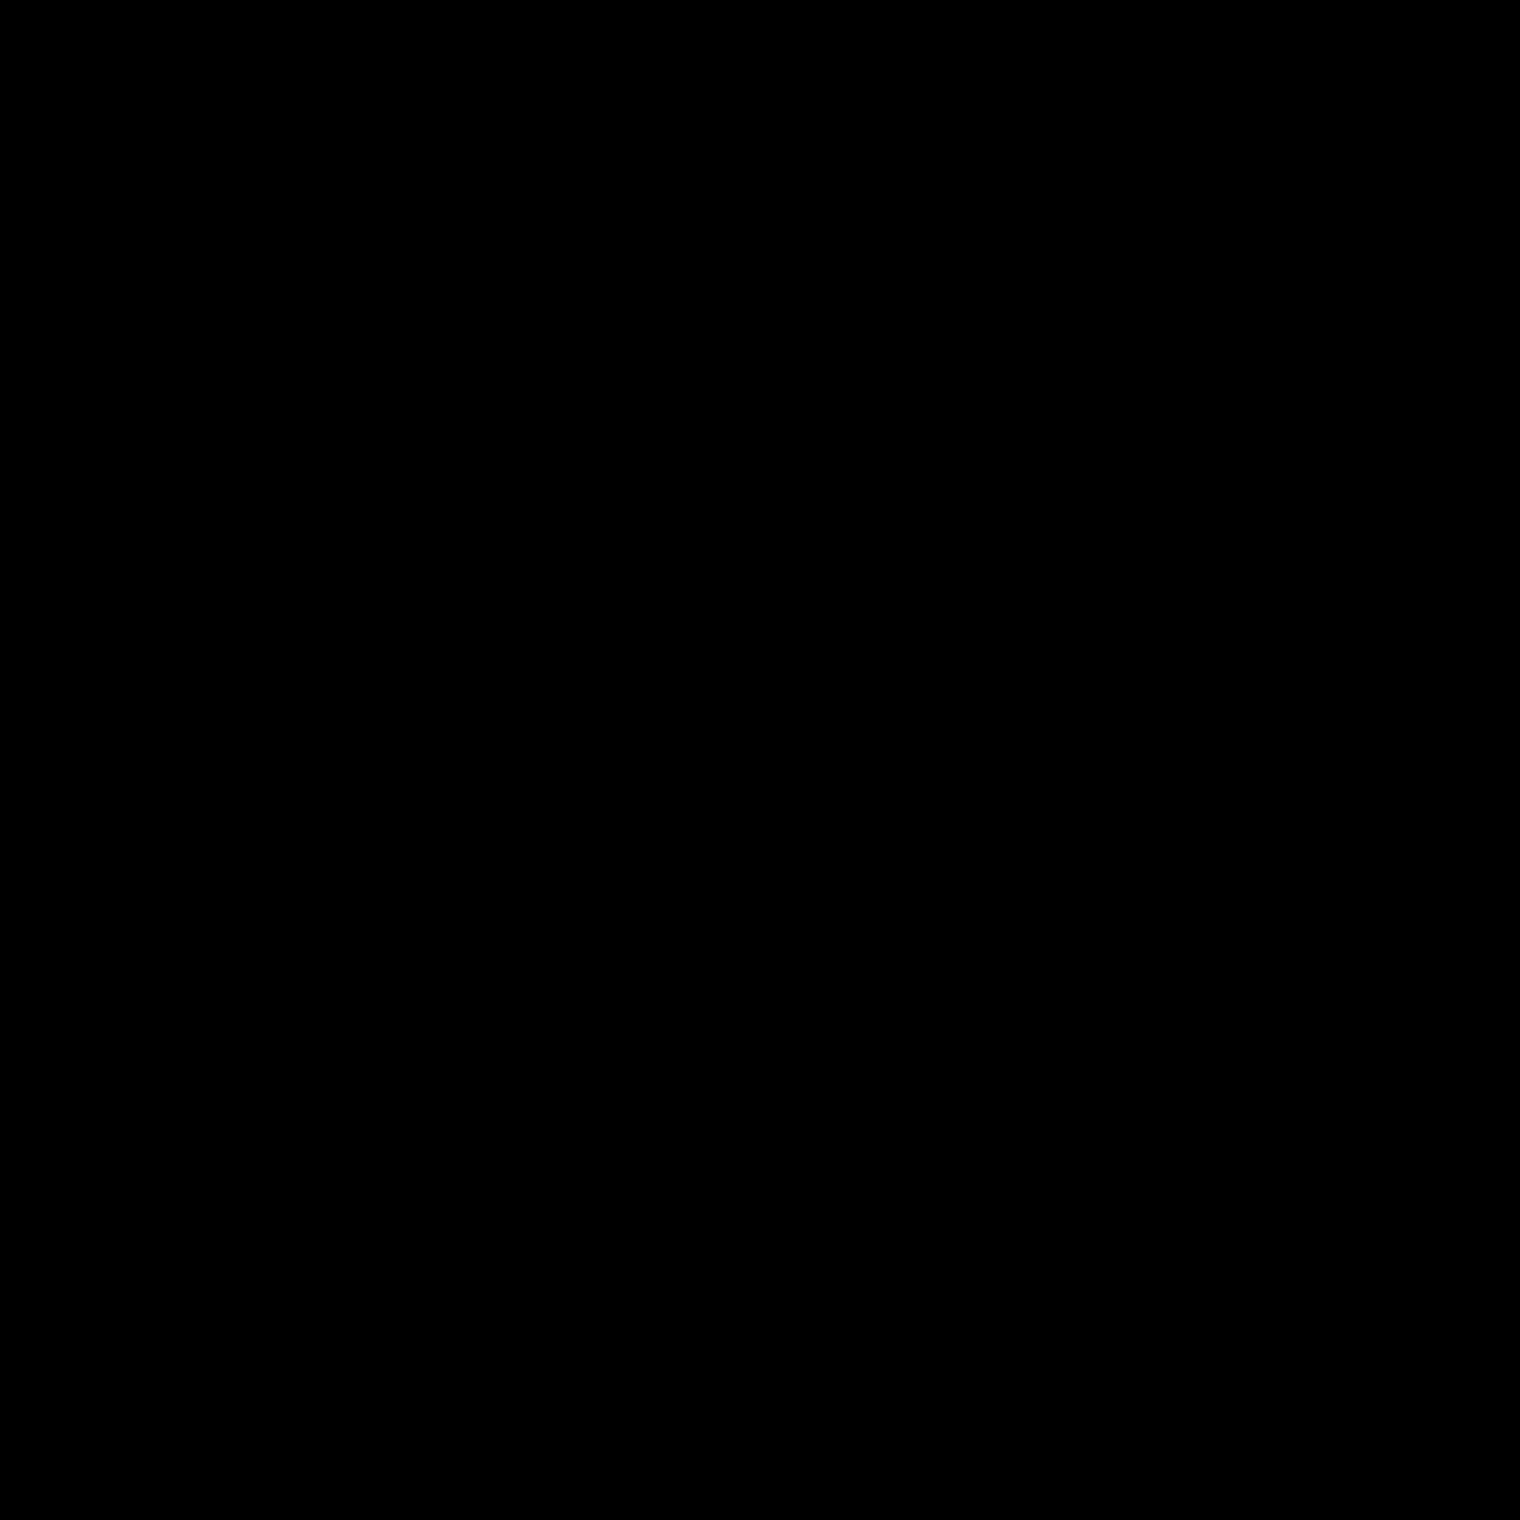 Logo du VPN